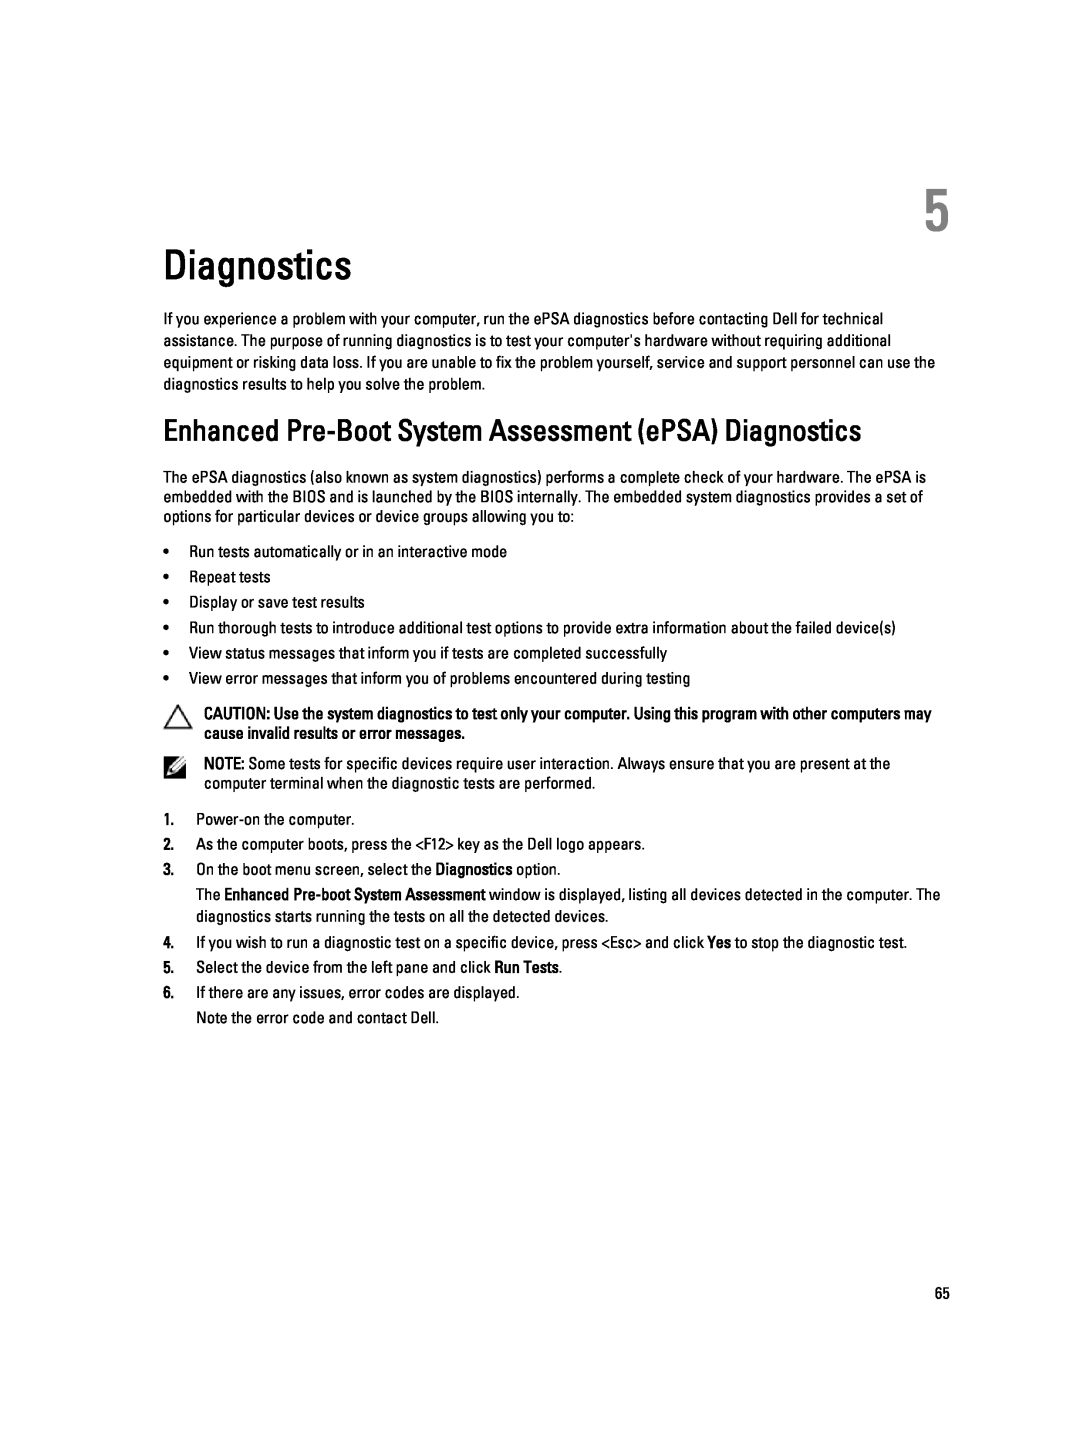 Dell T7610 owner manual Enhanced Pre-Boot System Assessment ePSA Diagnostics 